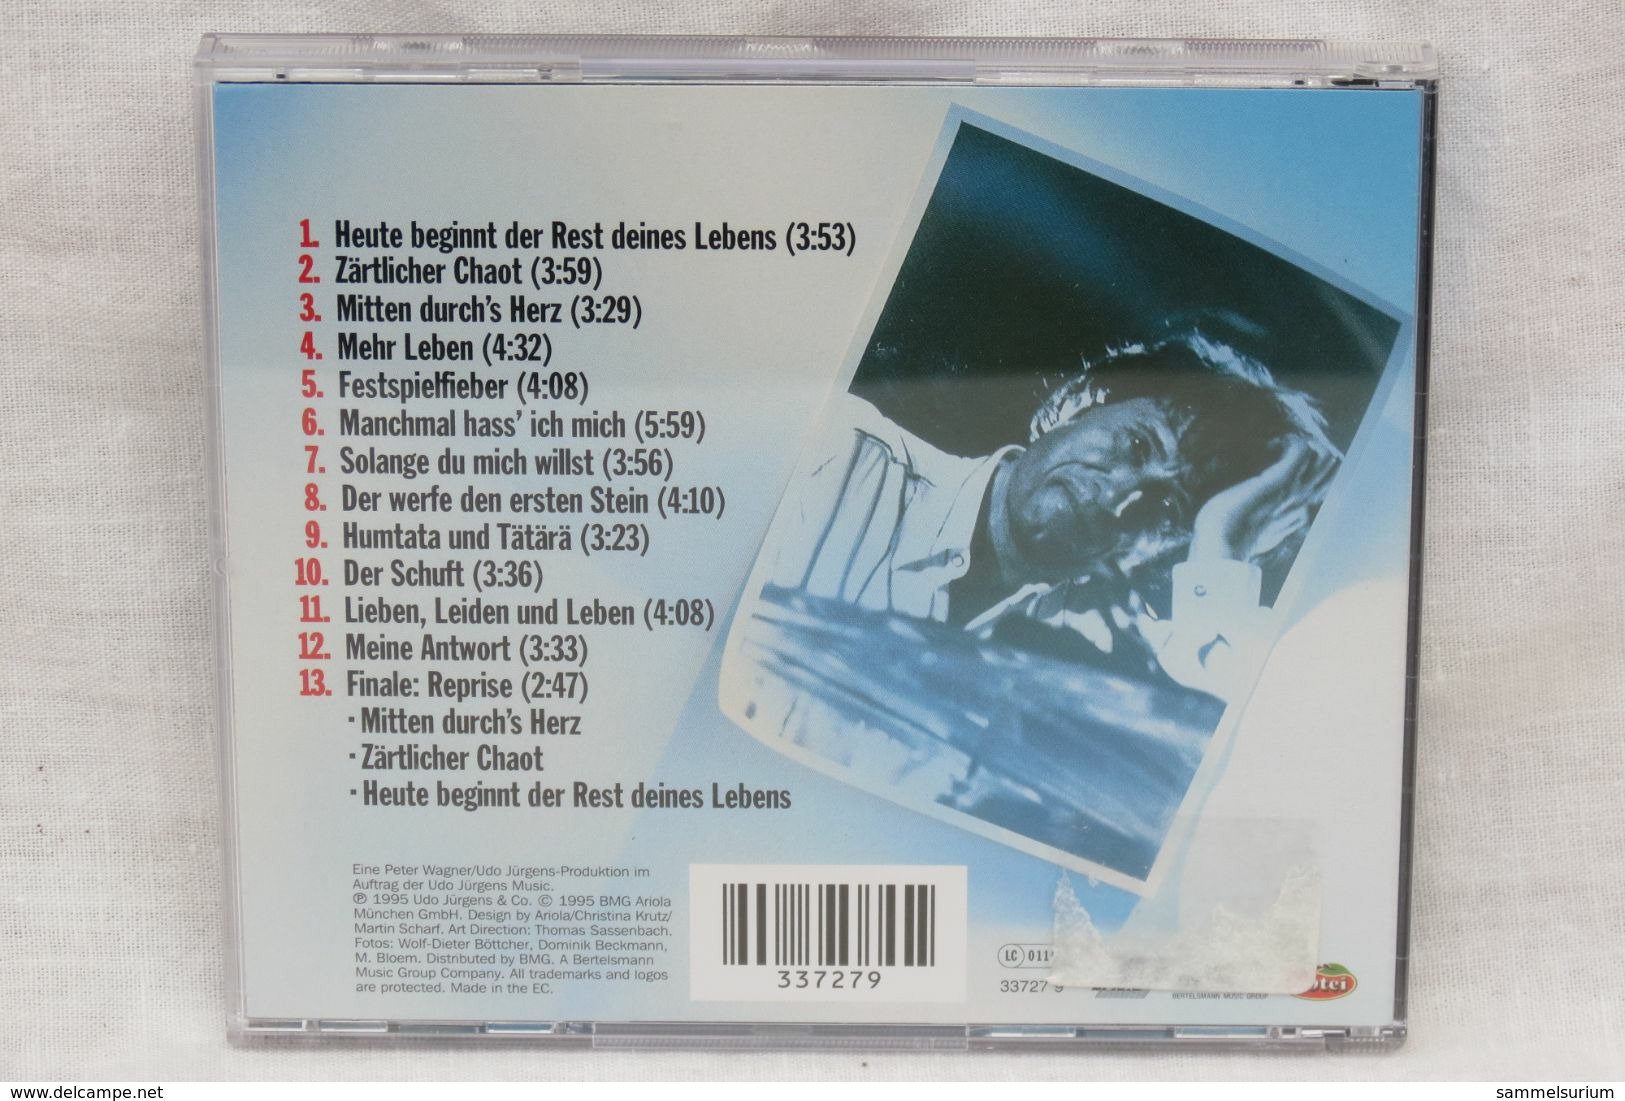 CD "Udo Jürgens" Zärtlicher Chaot - Other - German Music